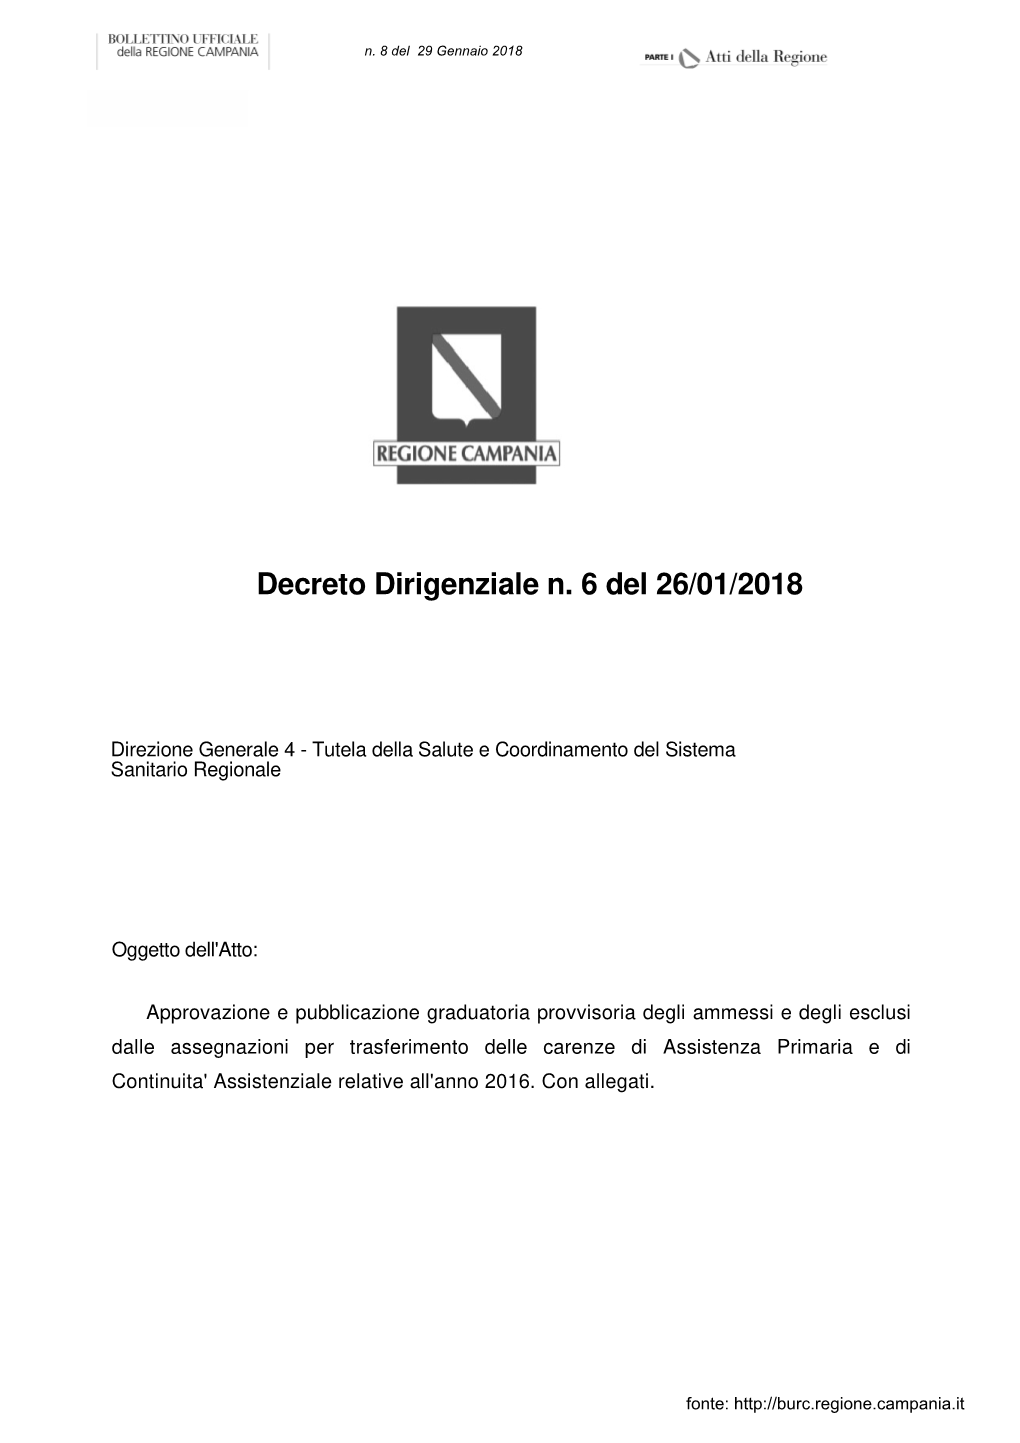 Decreto Dirigenziale N. 6 Del 26/01/2018